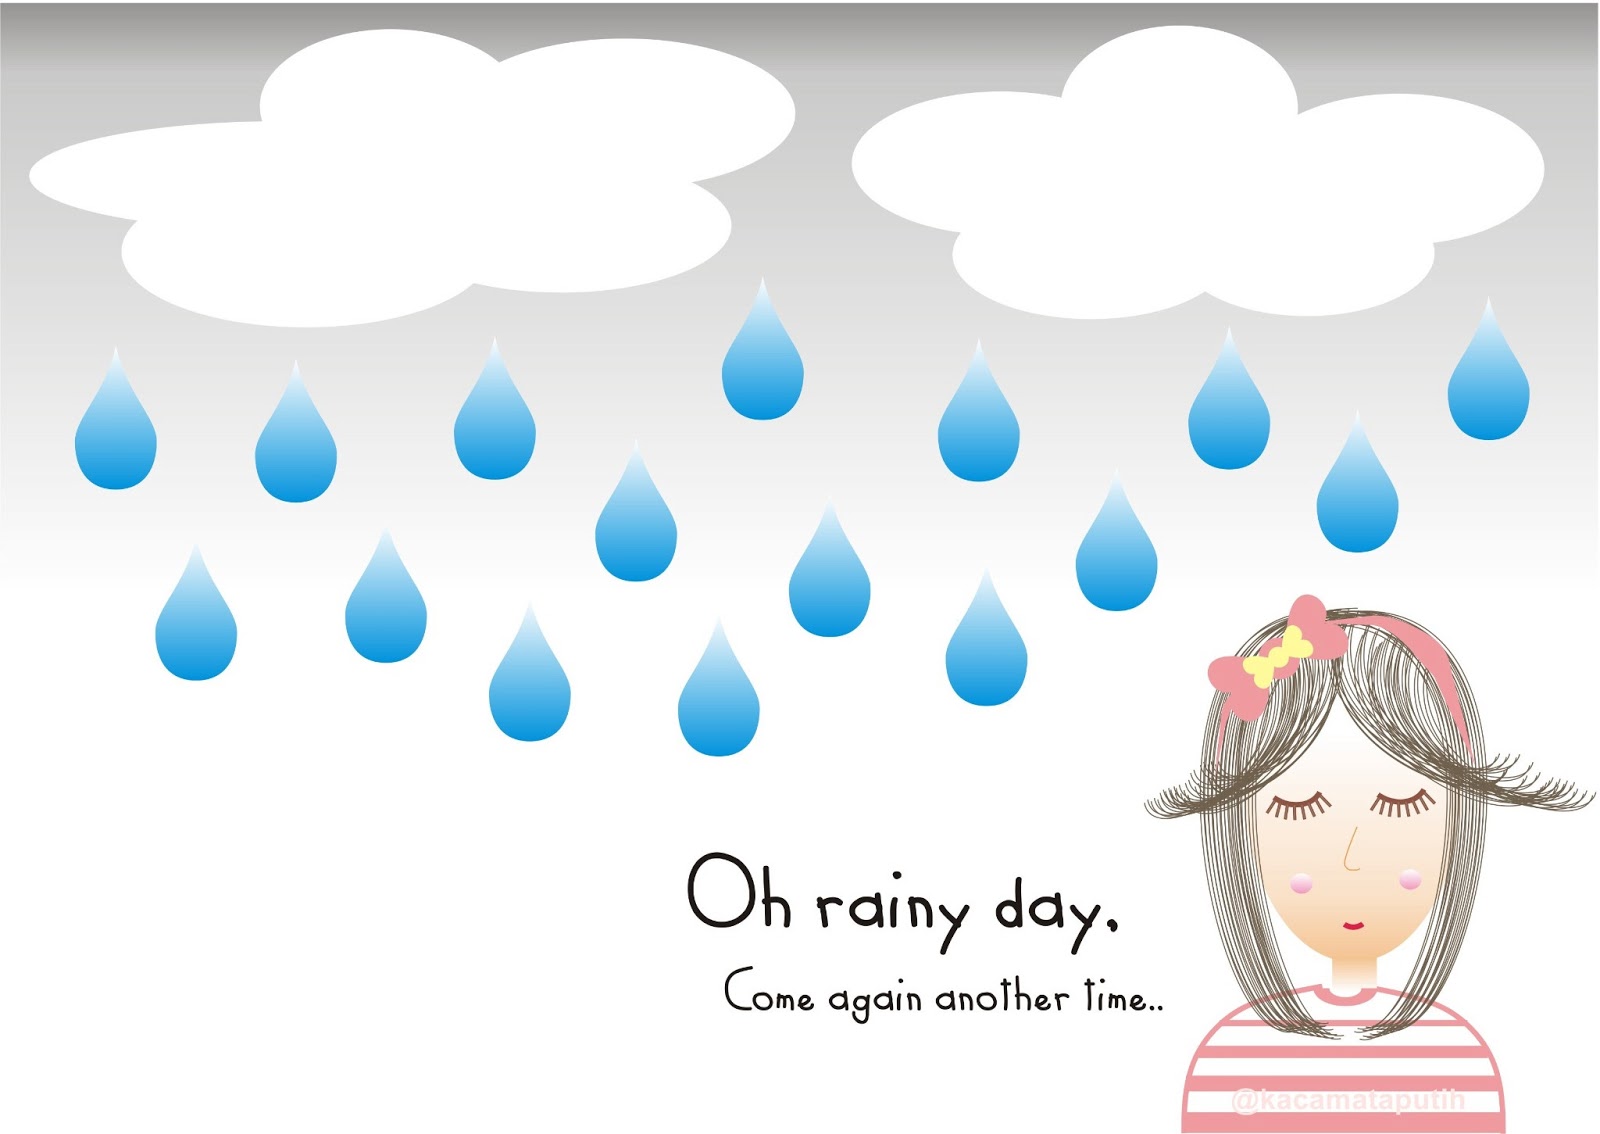 It is raining all day. Its Rainy. Rainy Day перевод. Save up for a Rainy Day идиома. Rainy Day quotes.